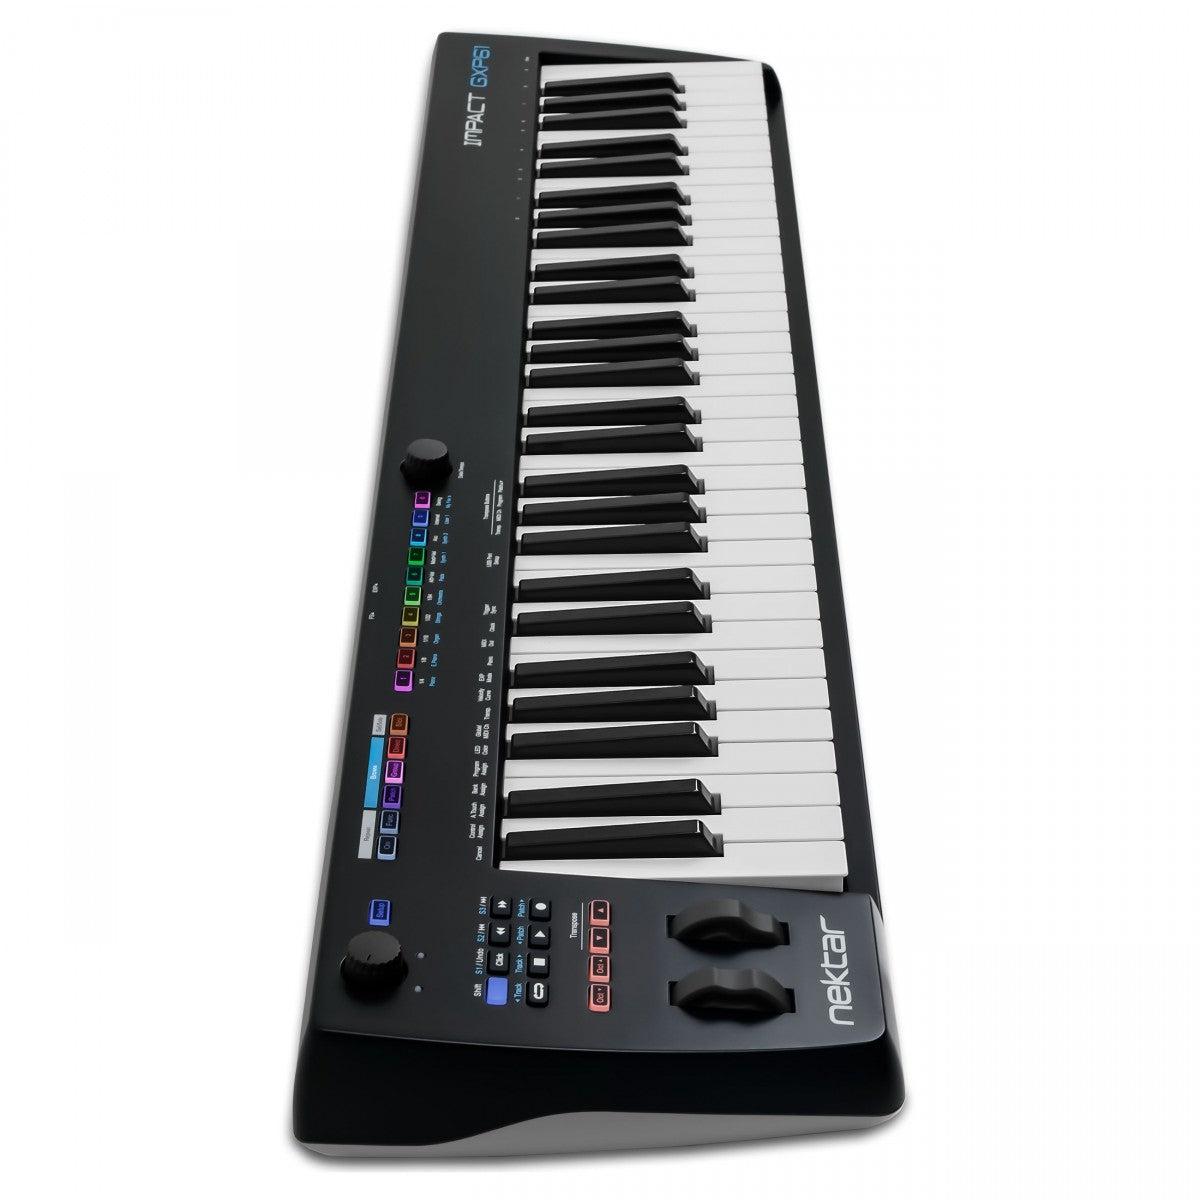 Midi Keyboard Controller Nektar Impact GXP61 - Việt Music